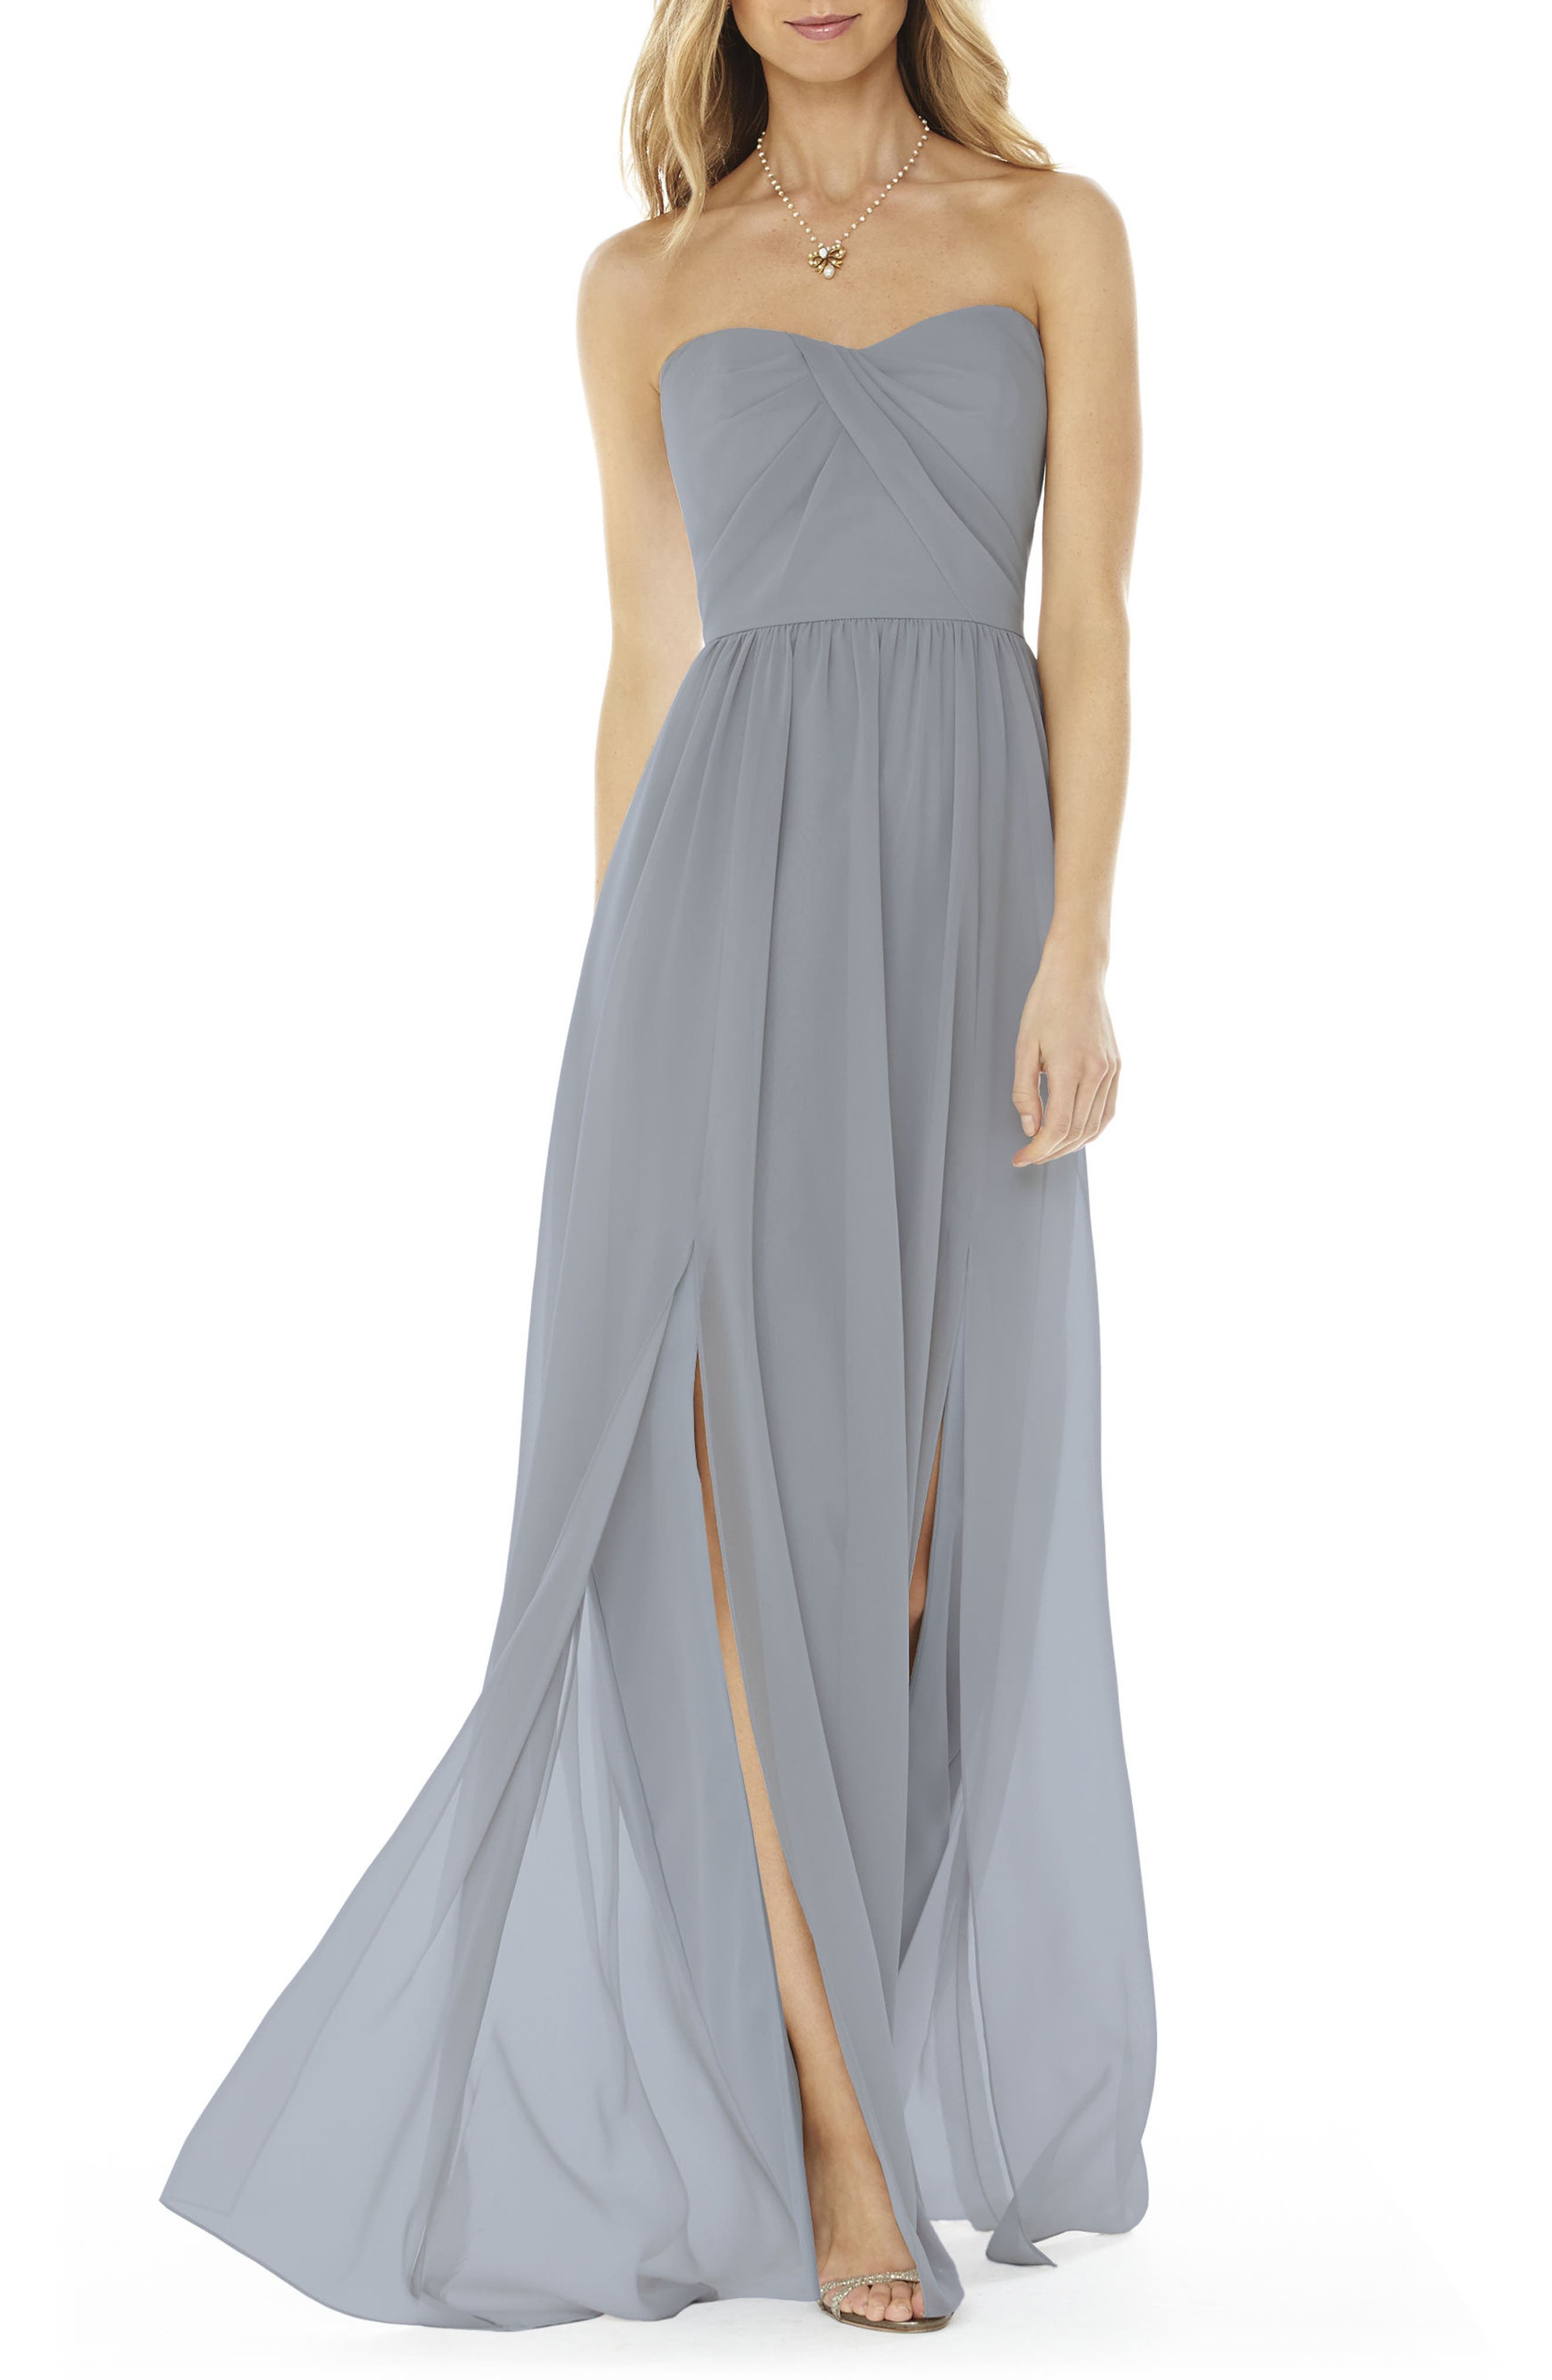 gray long dress for wedding